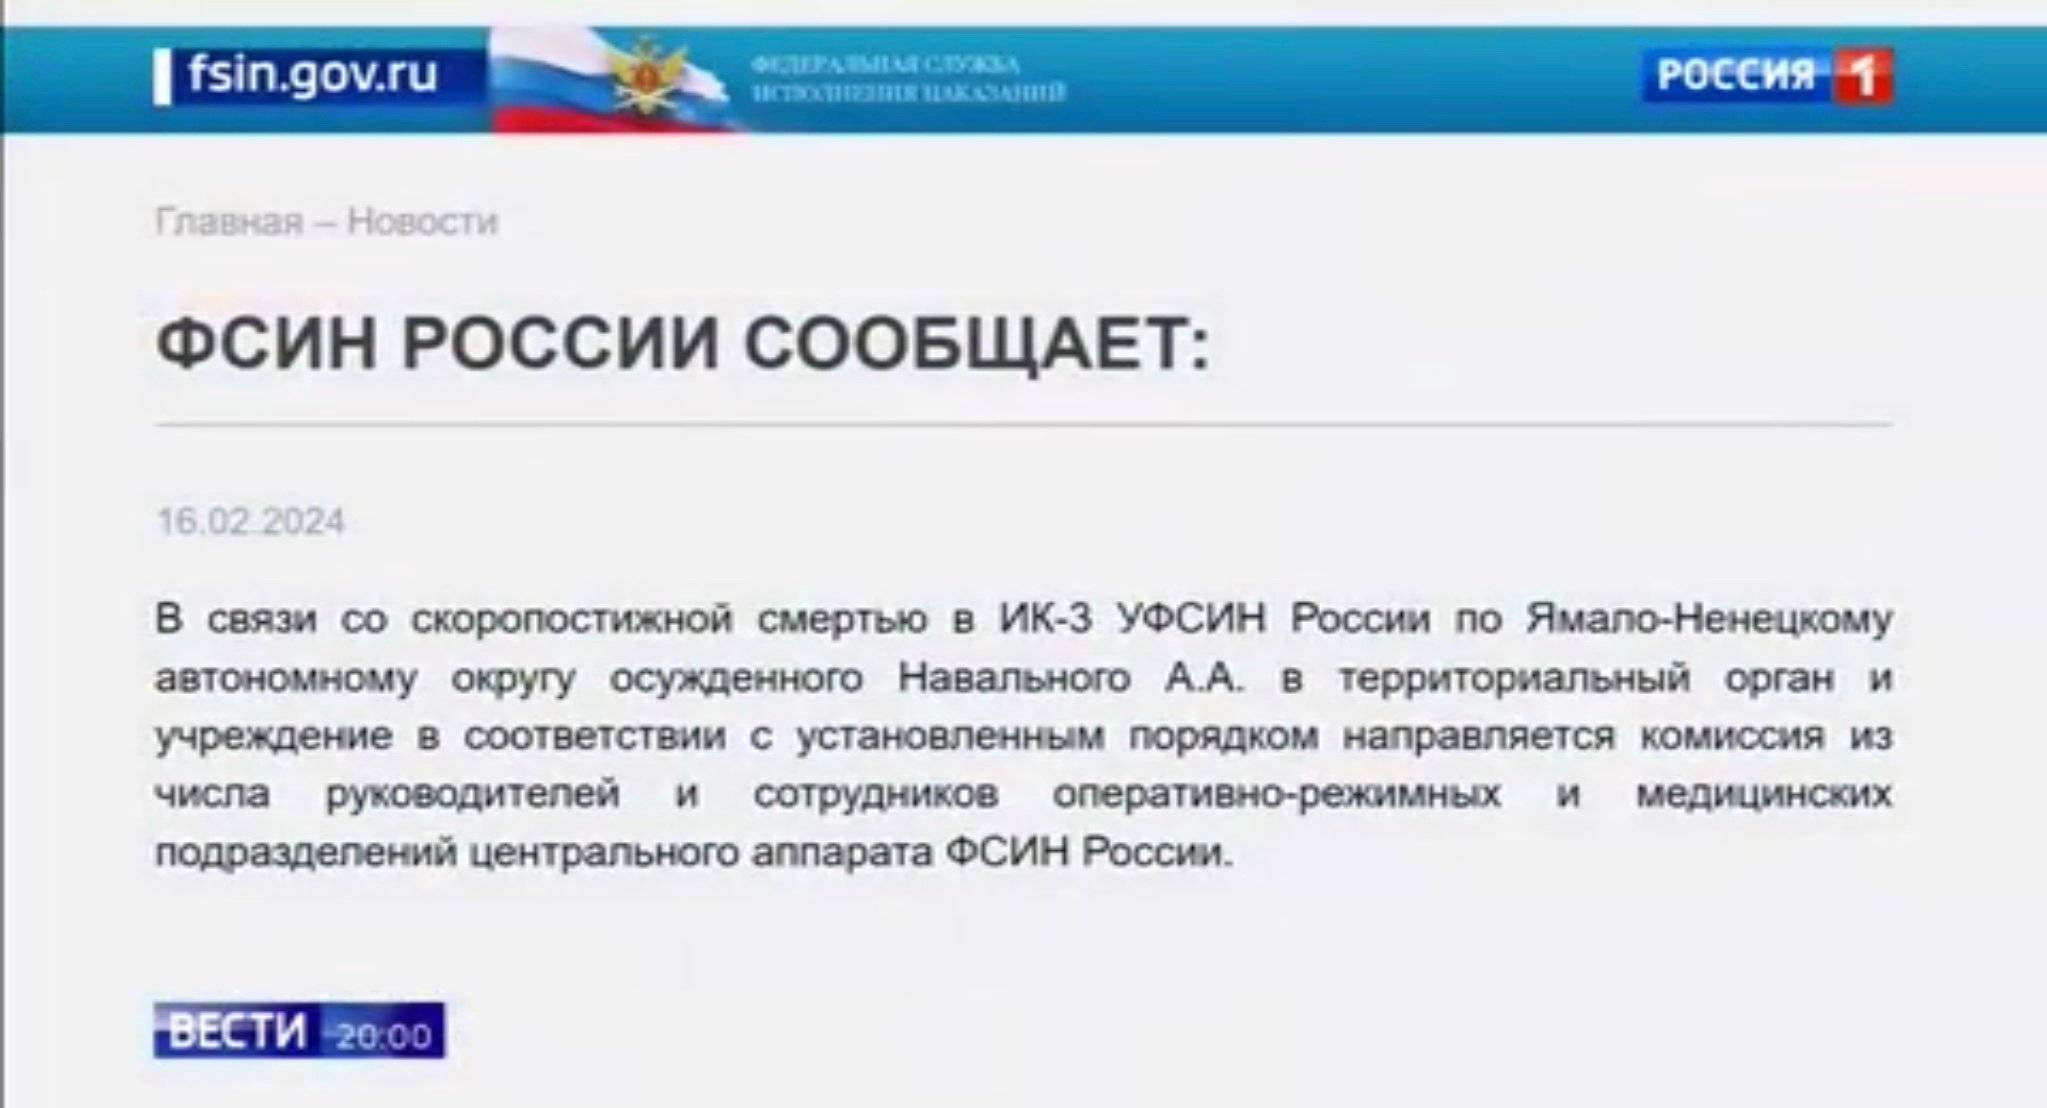 Komunikat po rosyjsku pokazany na ekranie telewizora